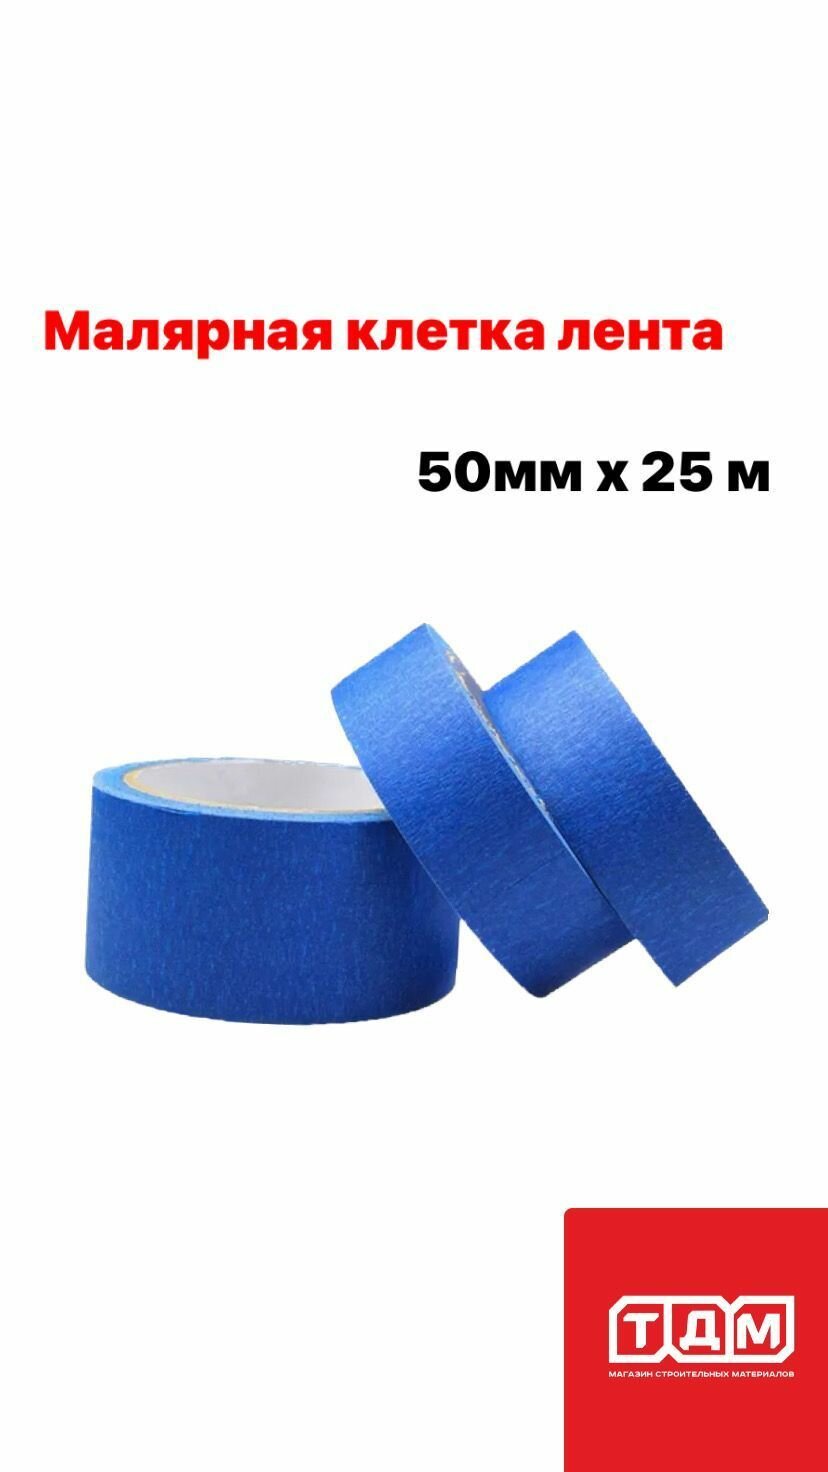 Малярная клейкая лента HOWARD 50мм х 25м синяя фасадная UF / waterproof 5дней натуральный каучук